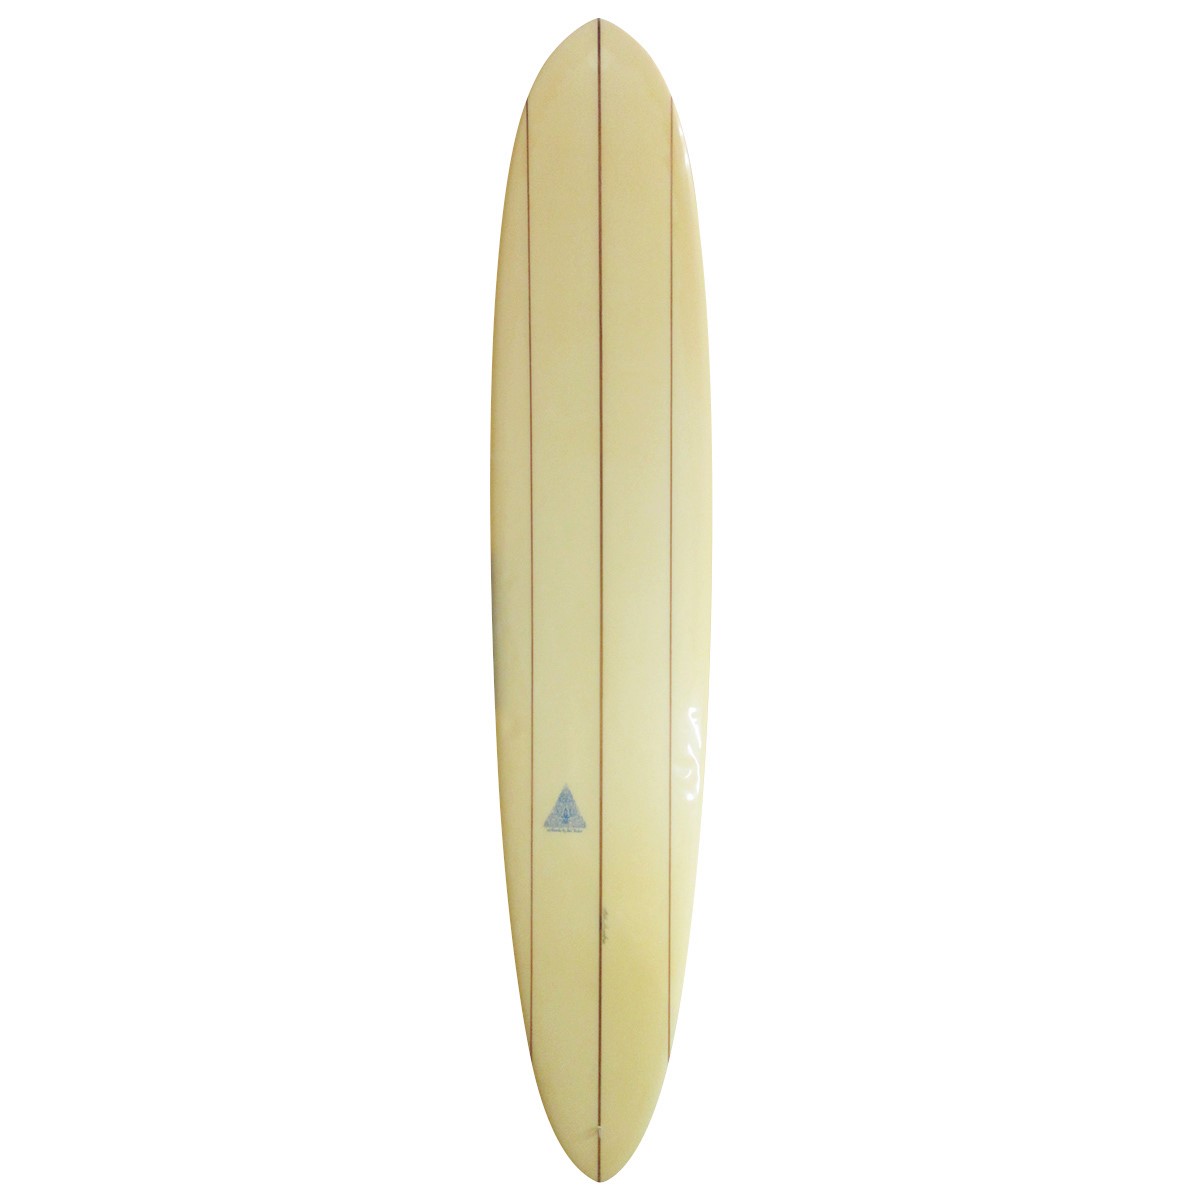 SURFBOARDS BY JOEL TUDOR / SURFBOARDS BY JOEL TUDOR / PAPA JOE 9`11 Shaped by BILL SHROSBREE